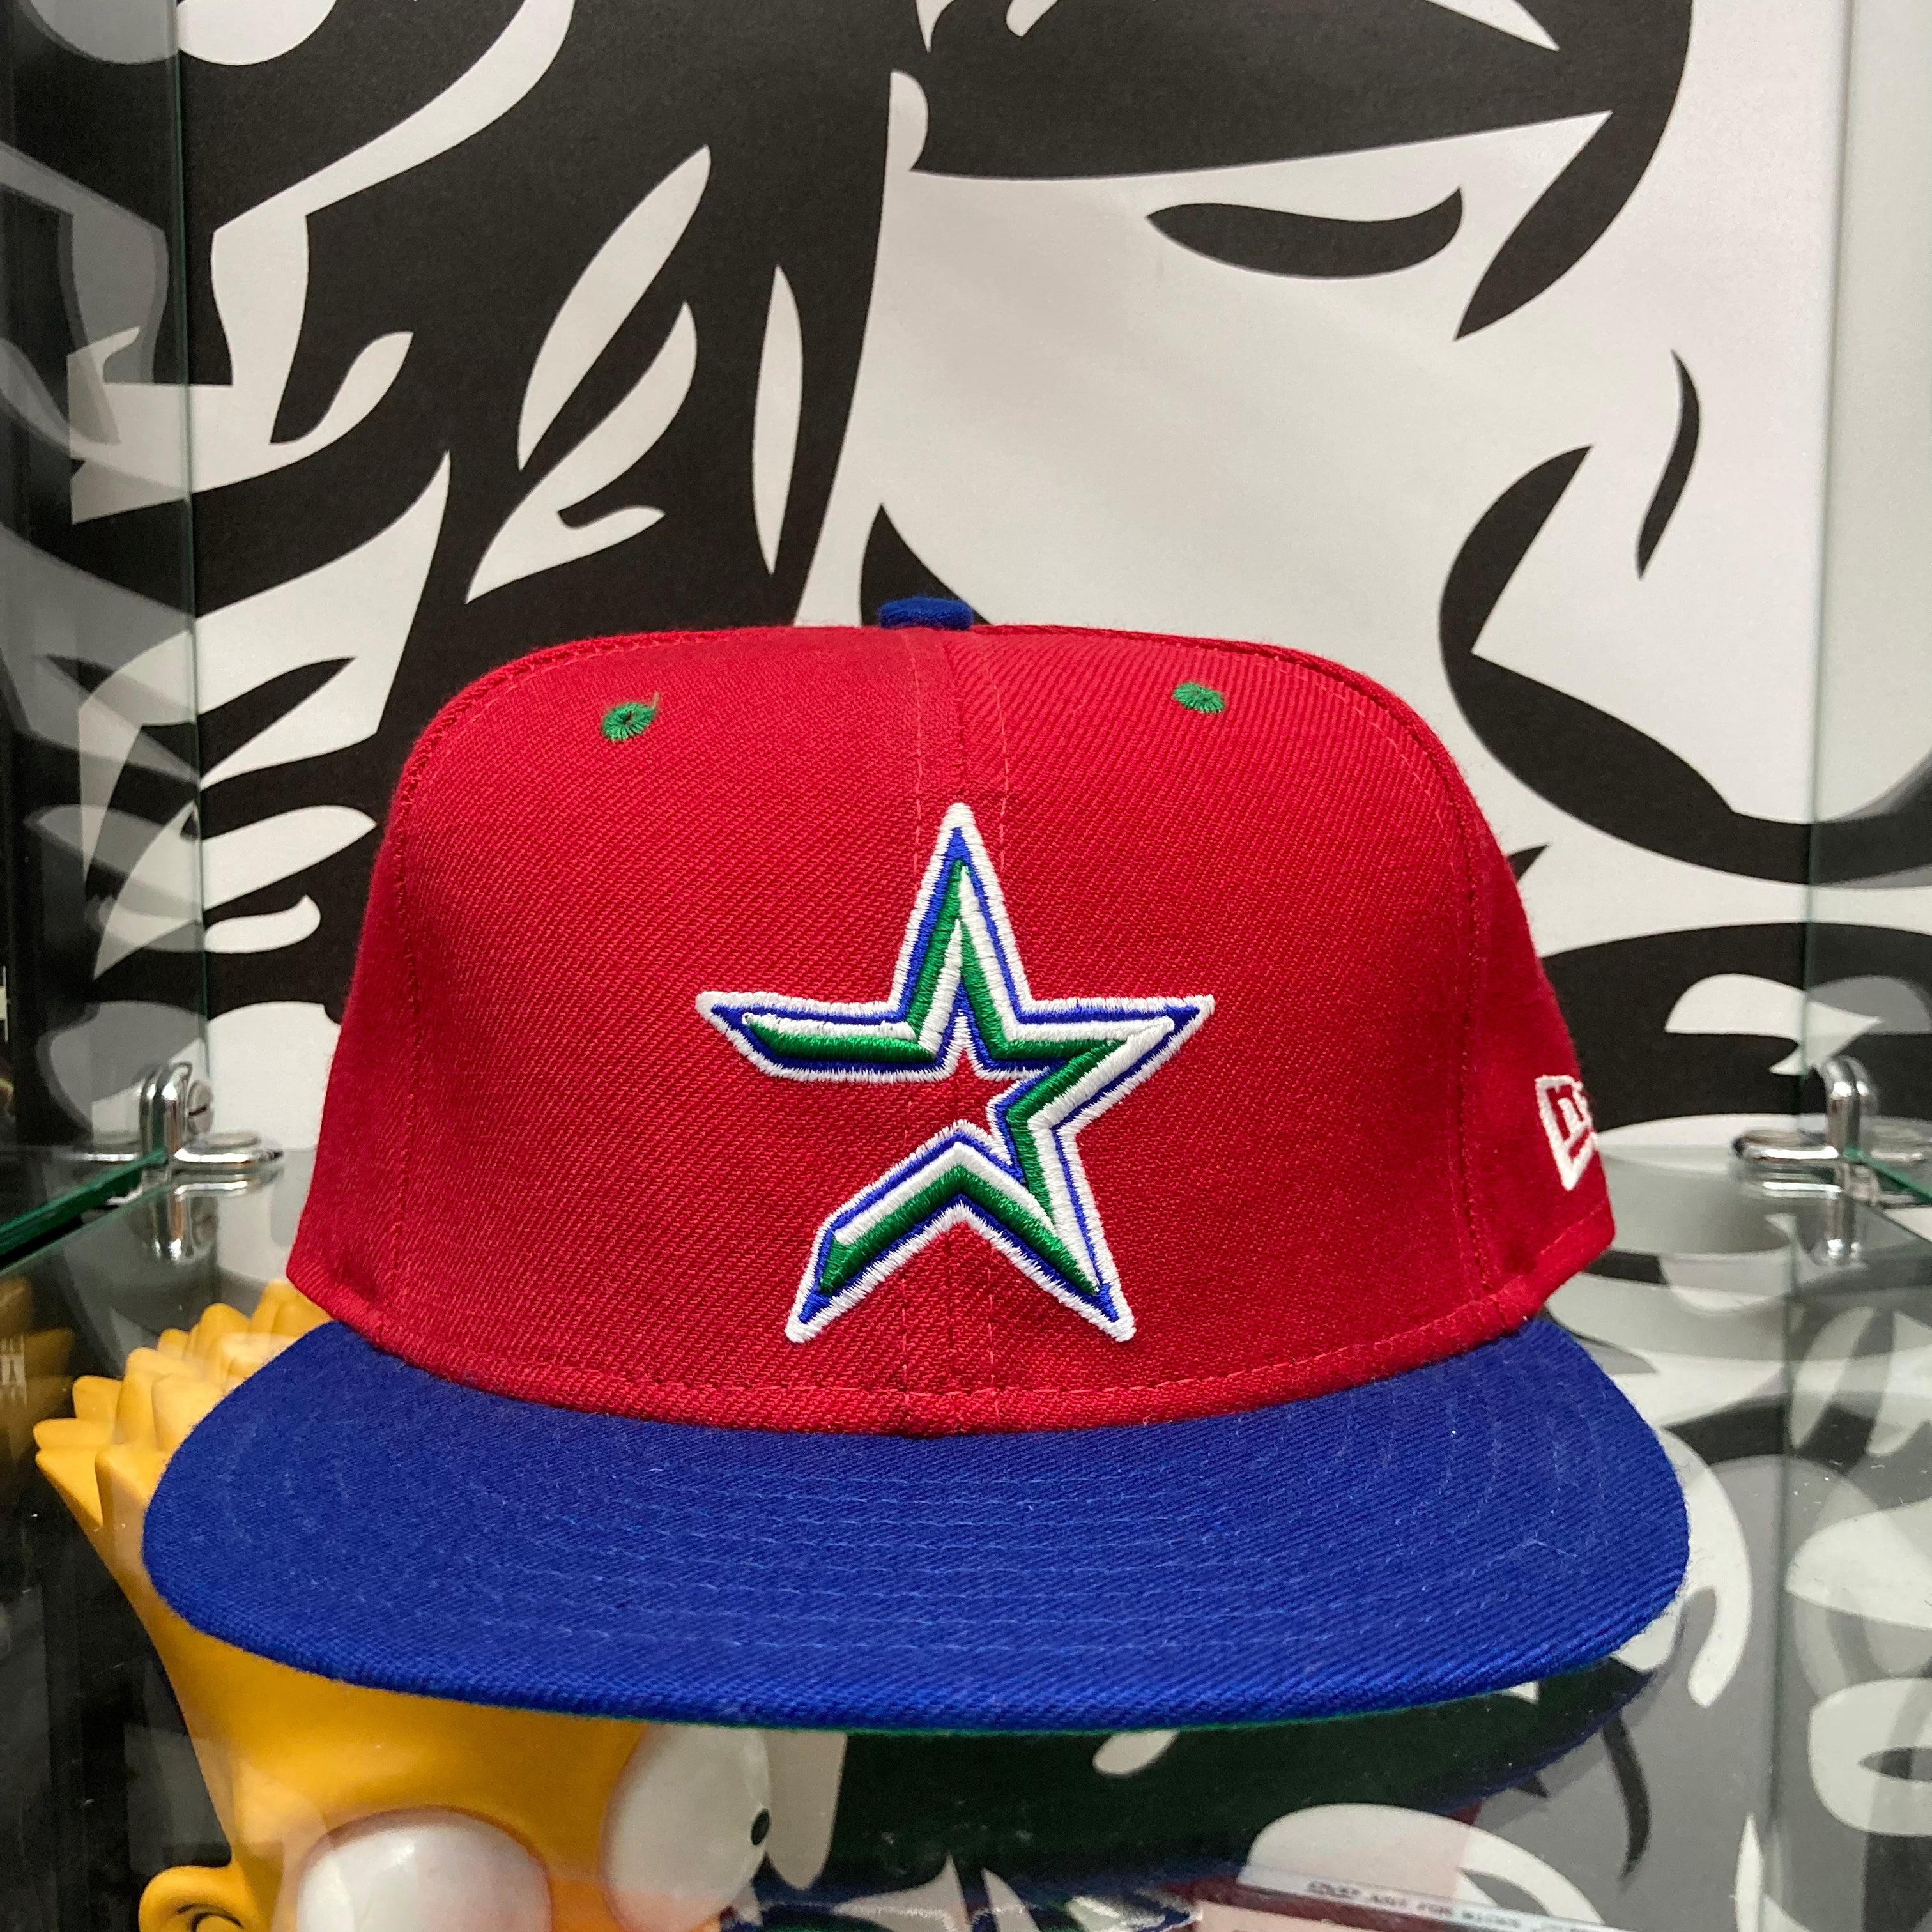 Vintage Houston Astros New Era Fitted Cap 7 1/4